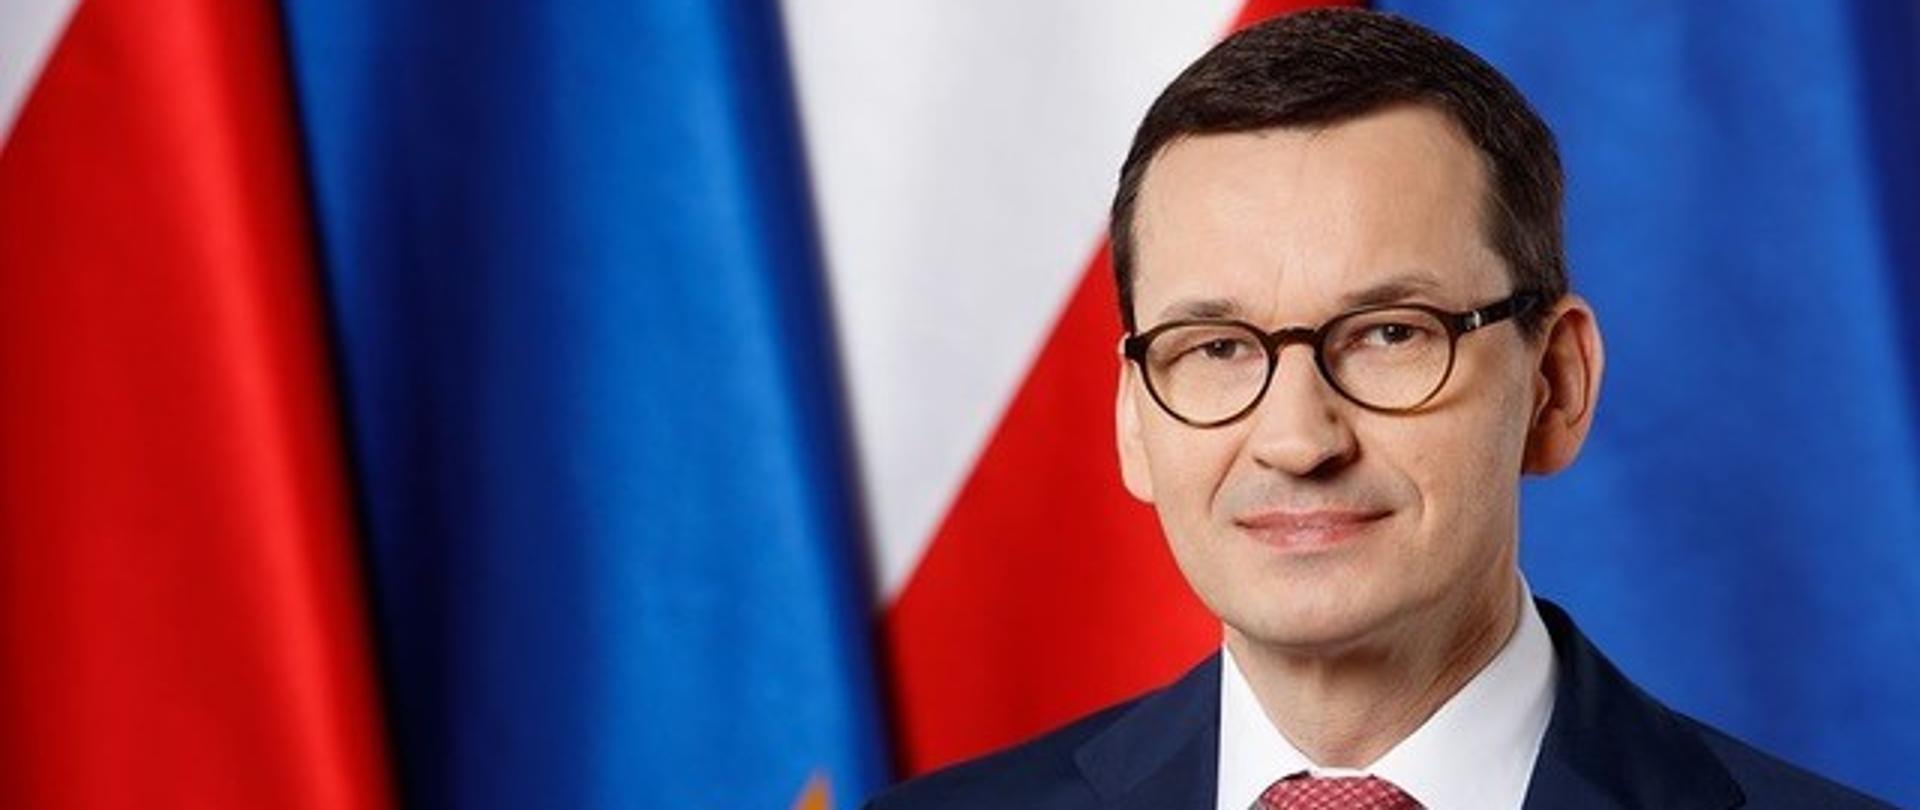 Mateusz MORAWIECKI - Primer ministro de la República de Polonia. 